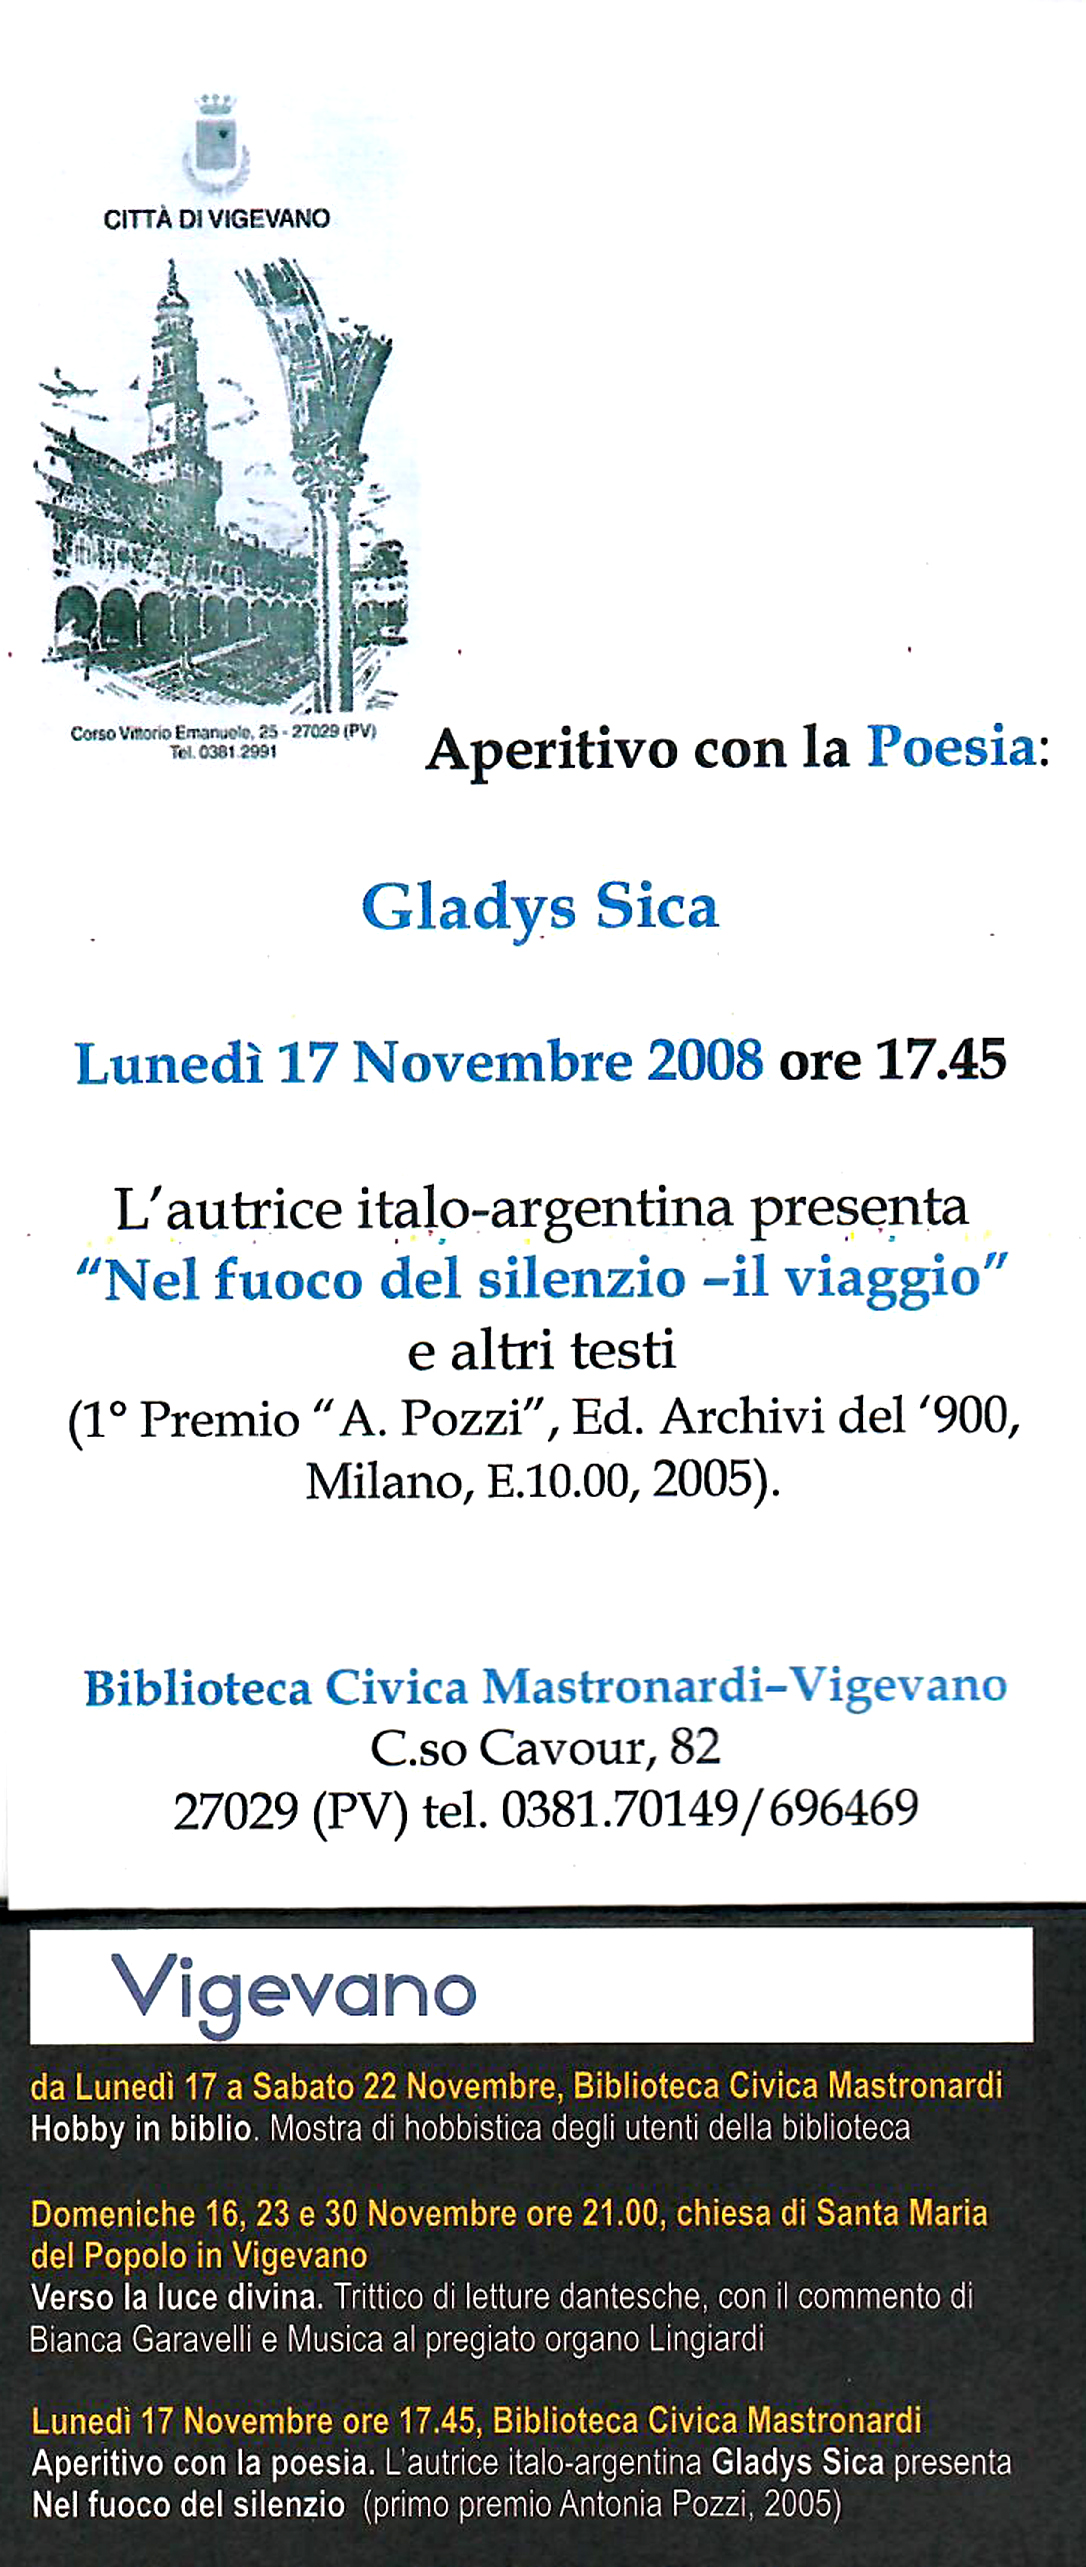 2008 -Aperitivo con la Poesia-, Poetessa Gladys Sica, Biblioteca Civica Mastronardi, Vigevano, PV.